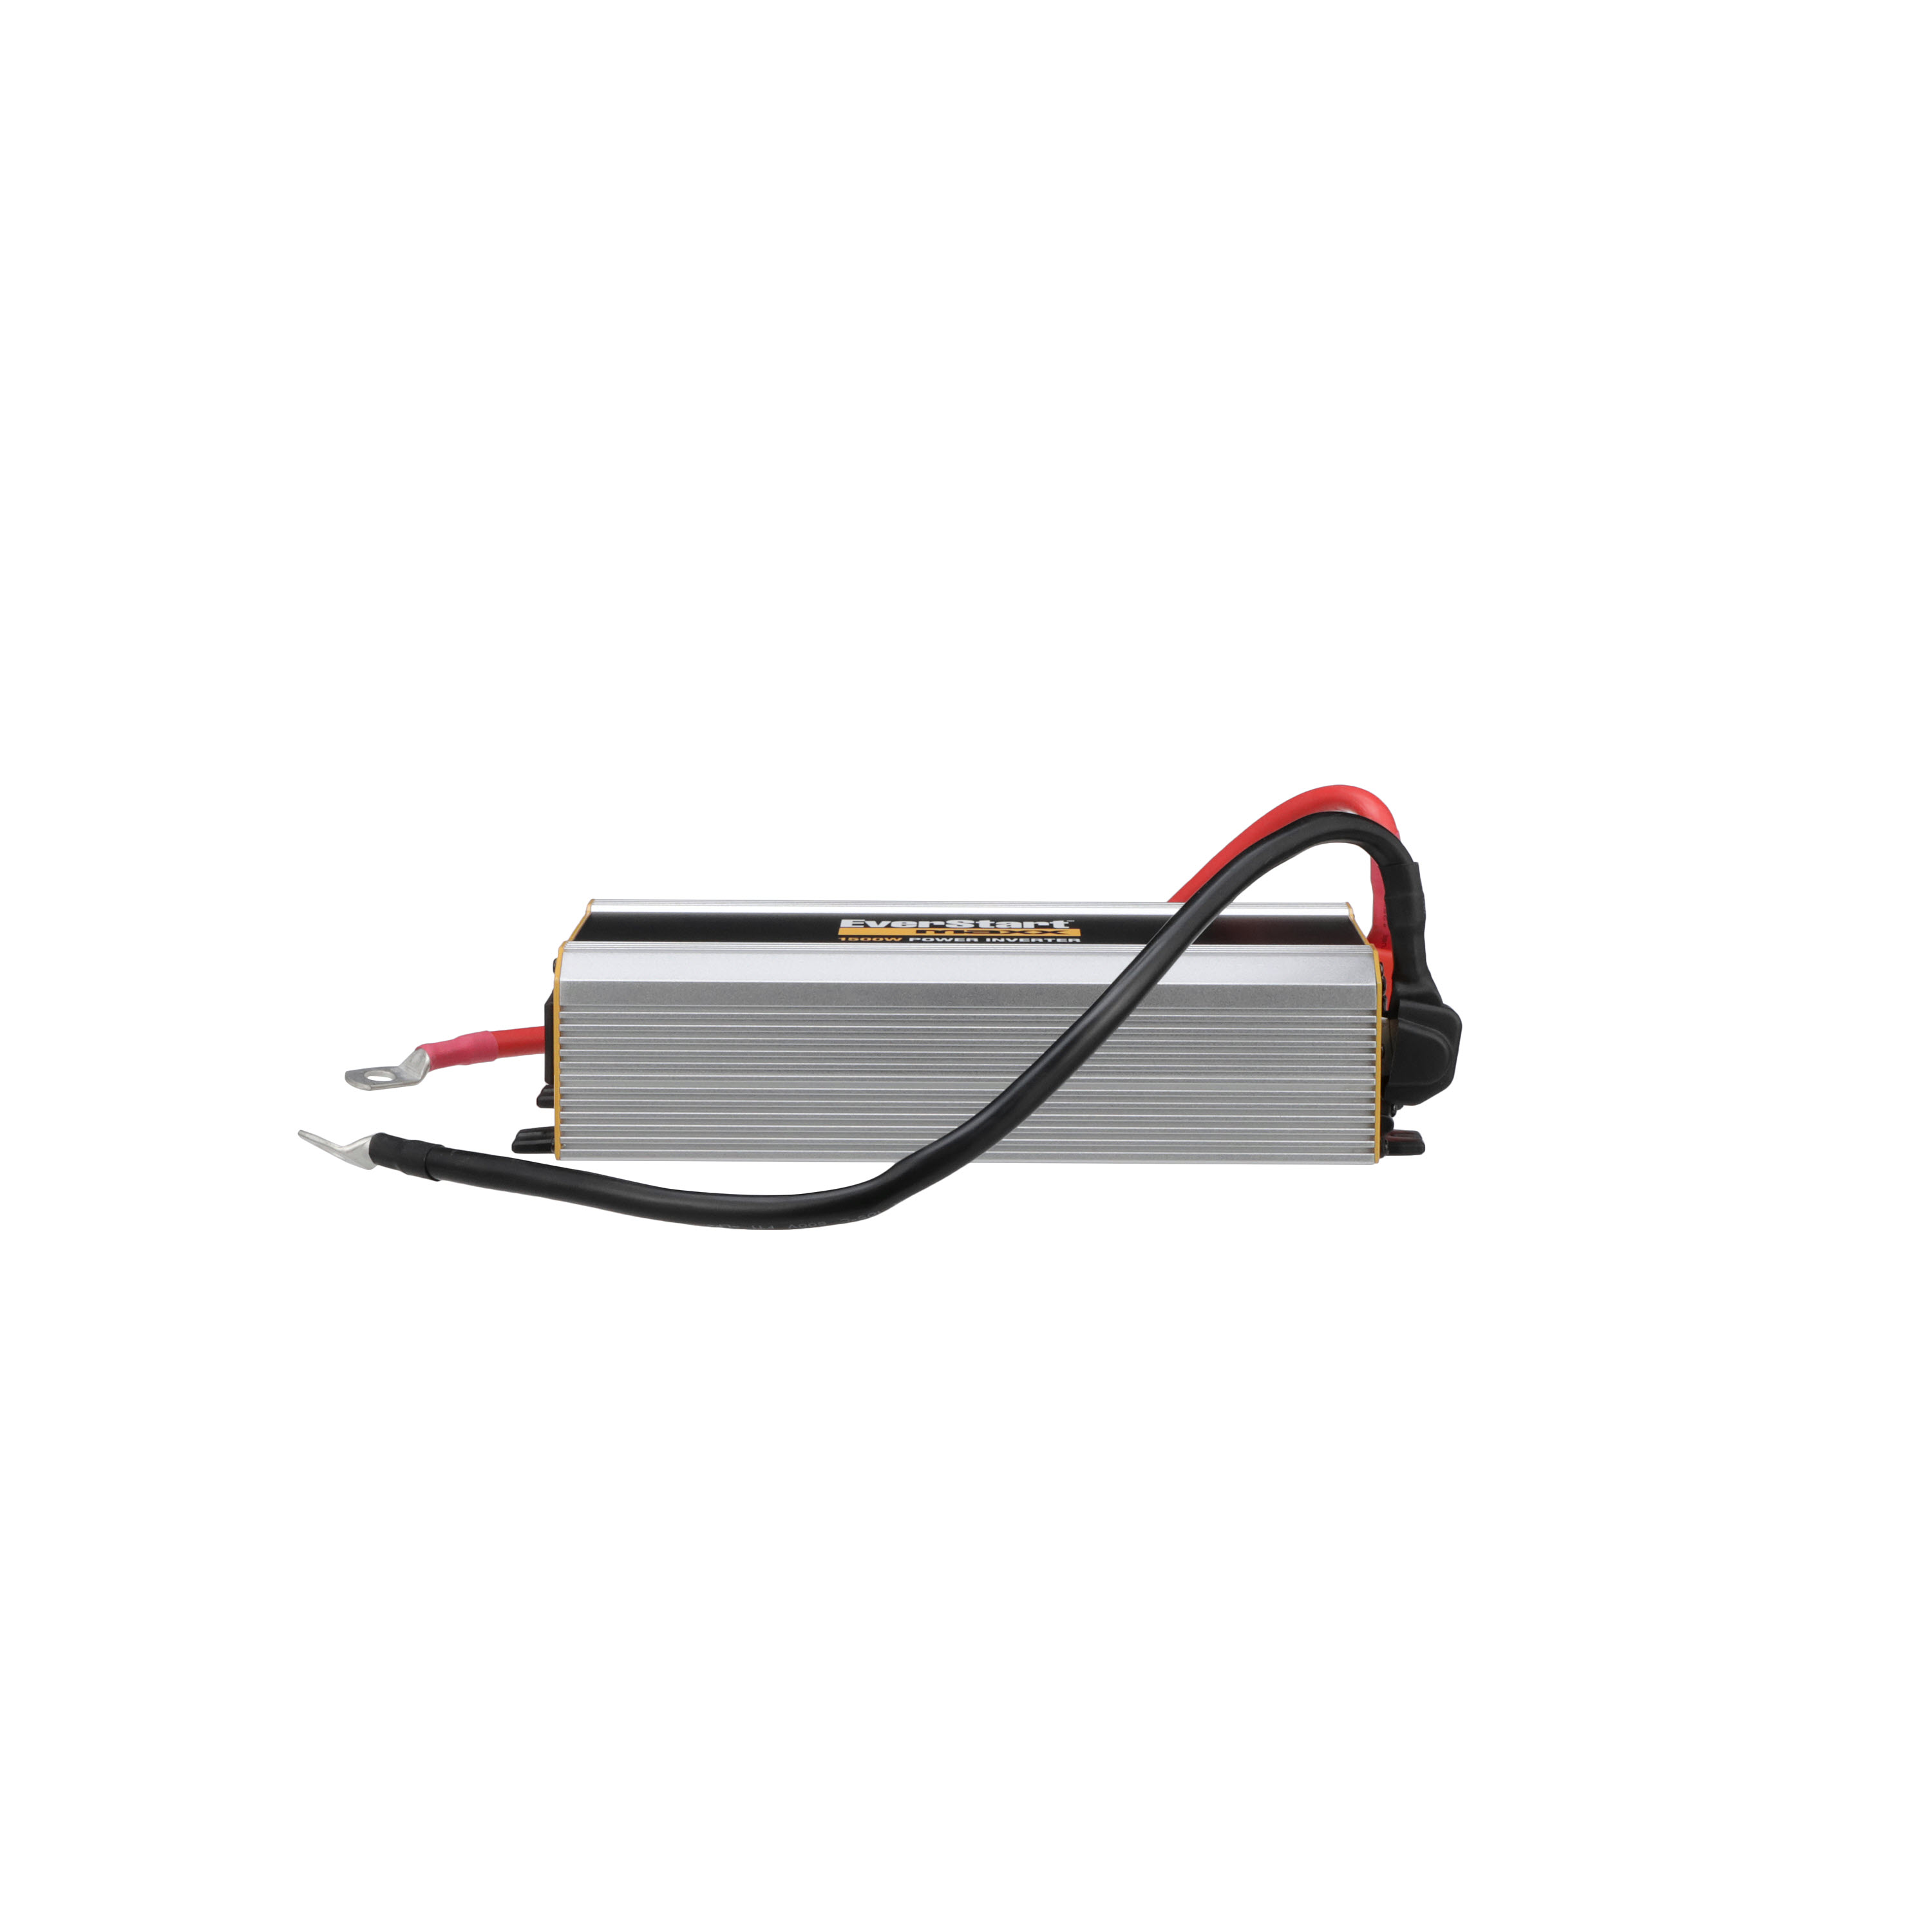 EverStart Maxx 1500 Watt Automotive Power Inverter with USB Power and  Digital Display (PC1500E)- New 